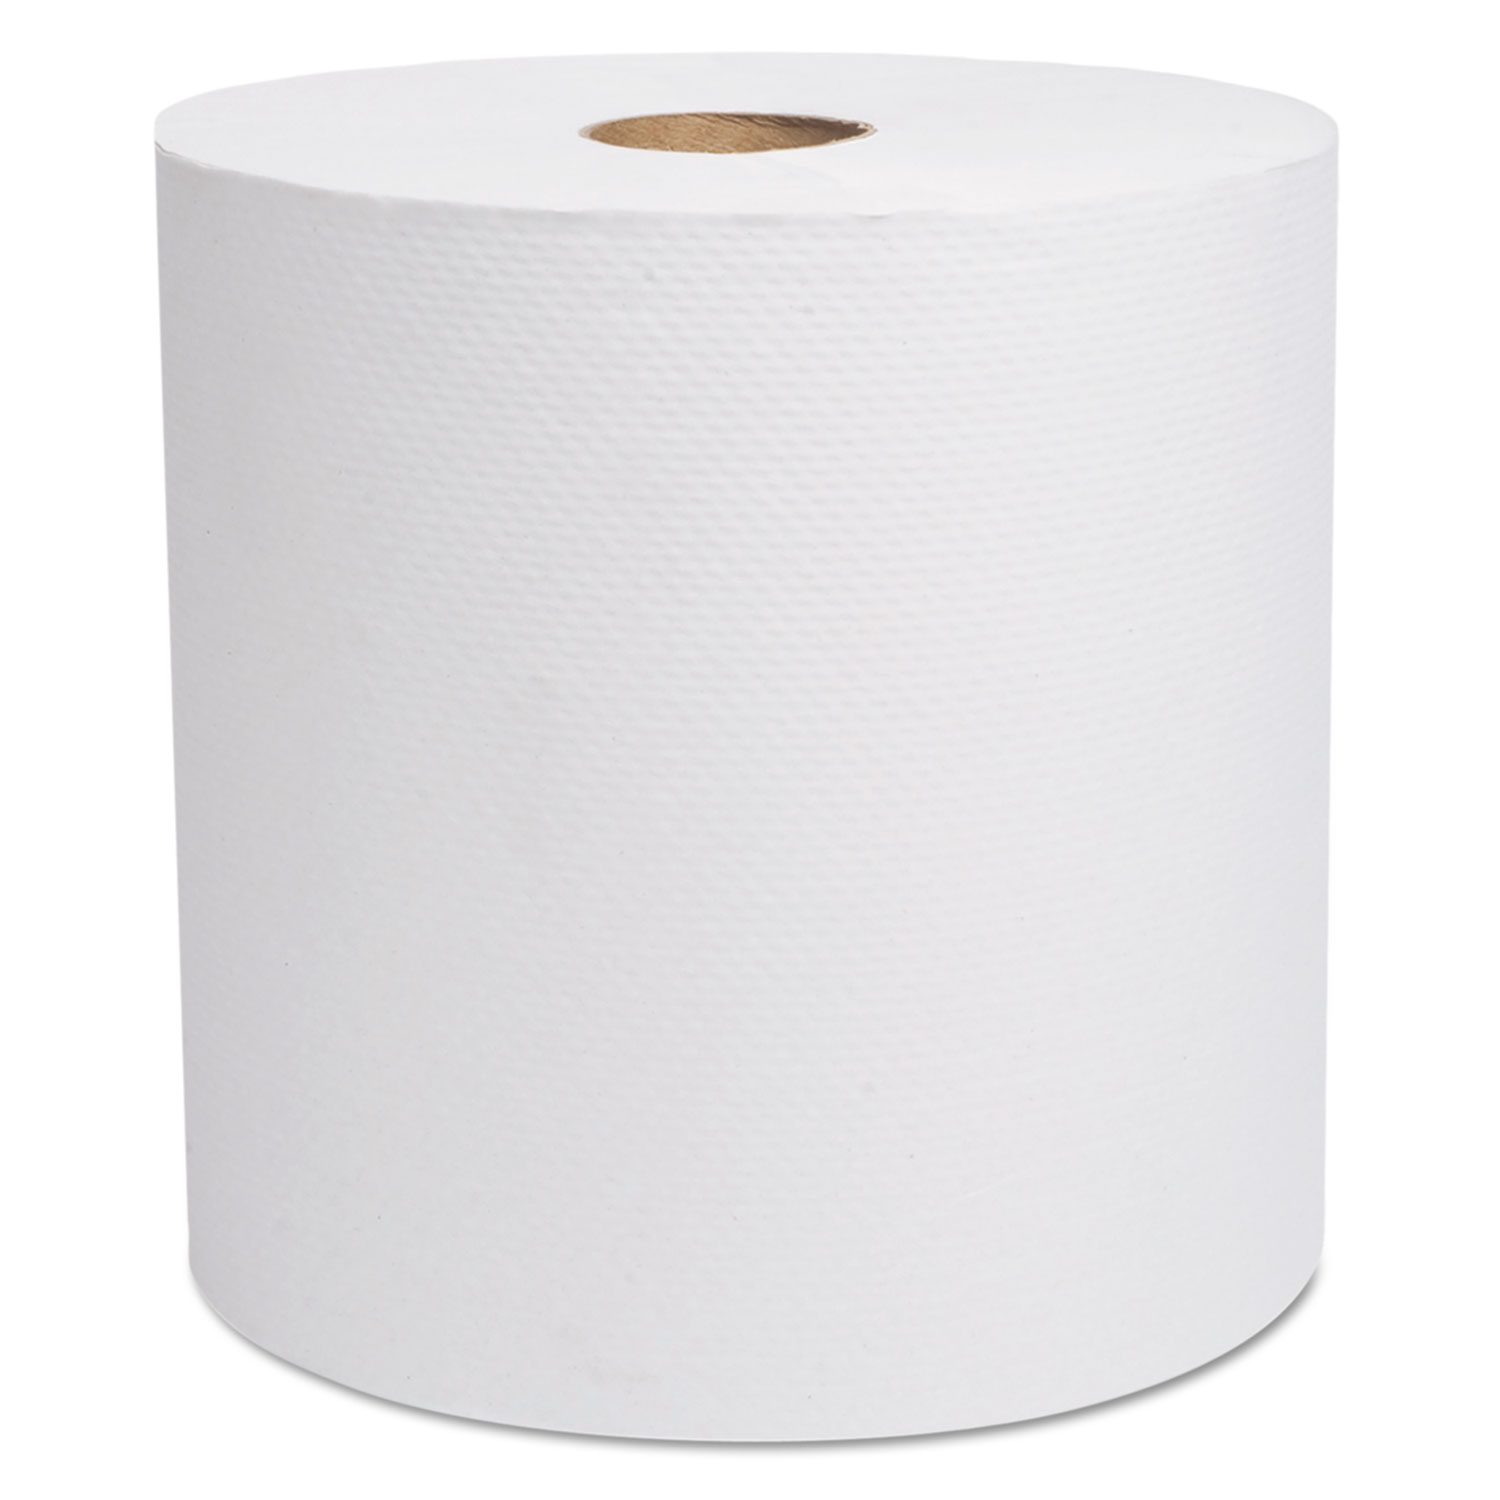  Cascades PRO H280 Select Hardwound Roll Towels, White, 7 7/8 x 800 ft, 6/Carton (CSDH280) 